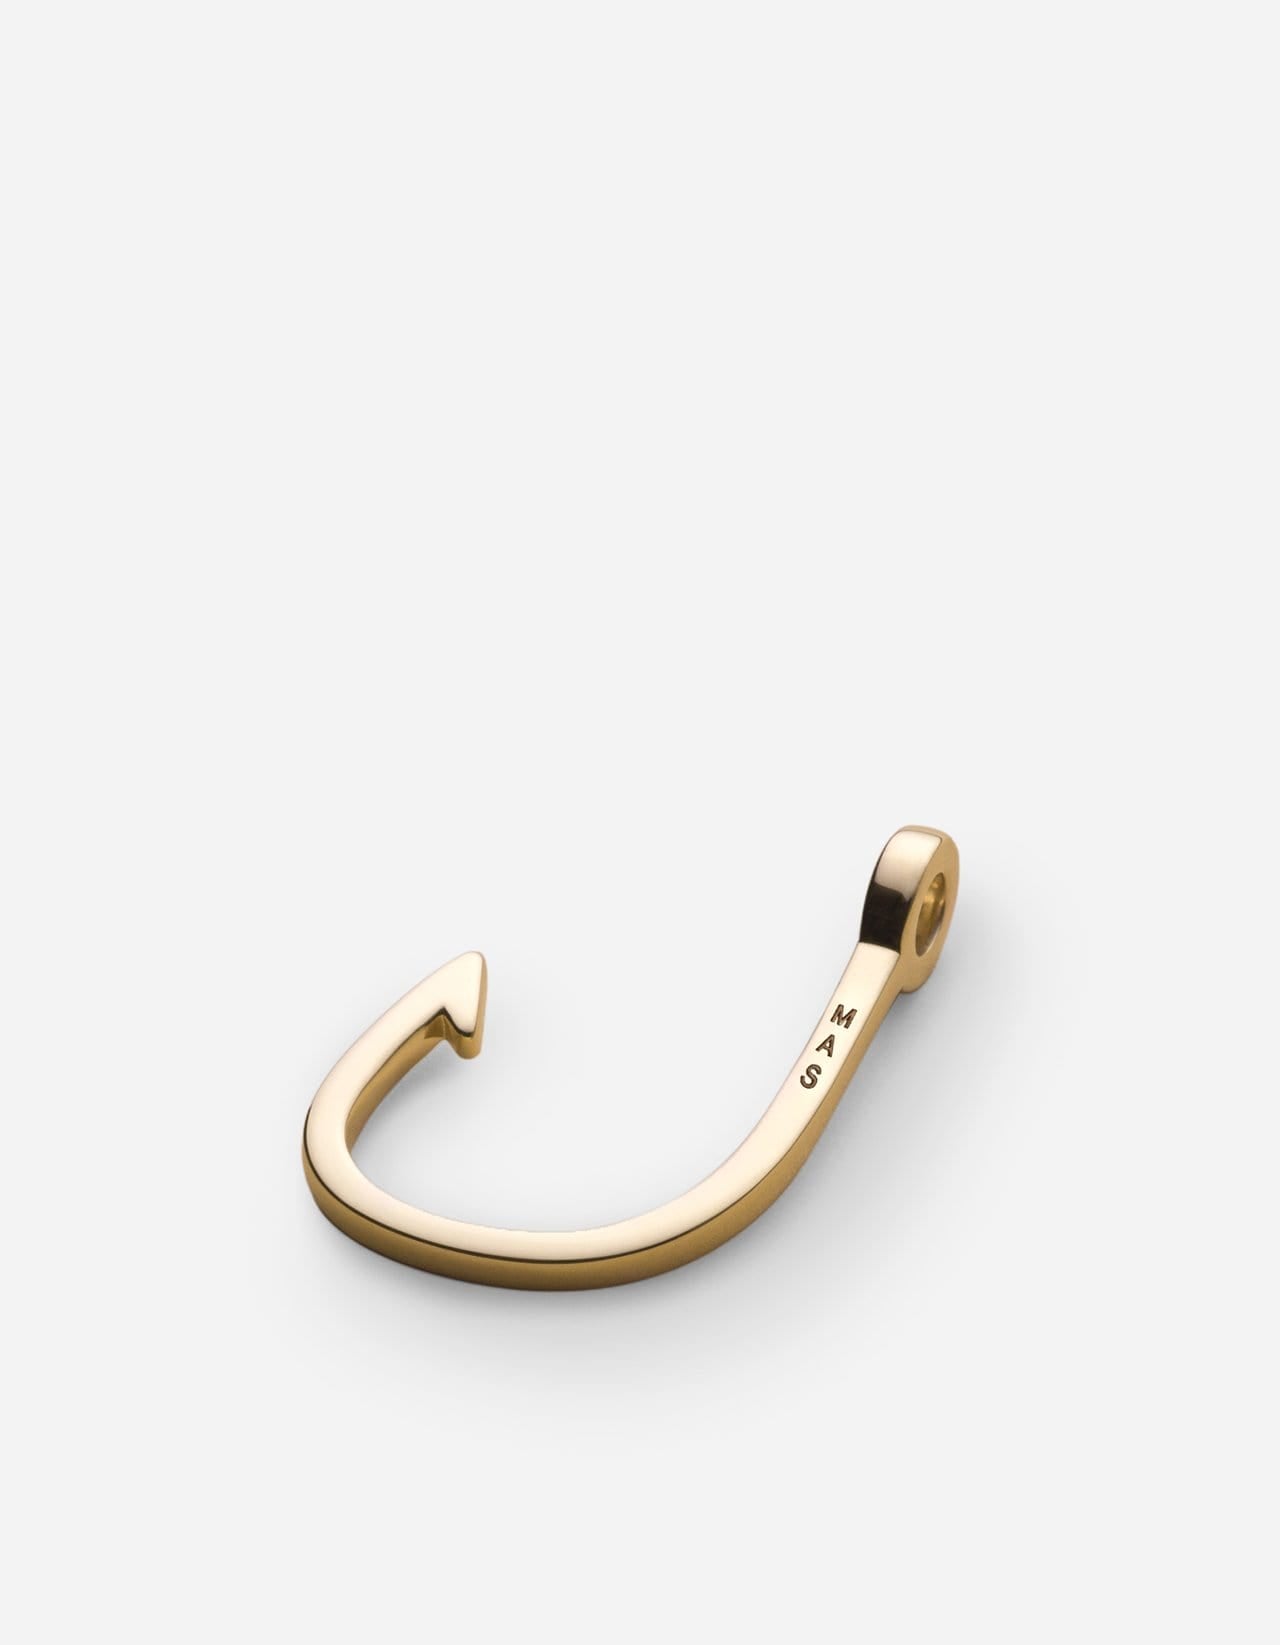 Miansai Gold Hook Leather Bracelet Black